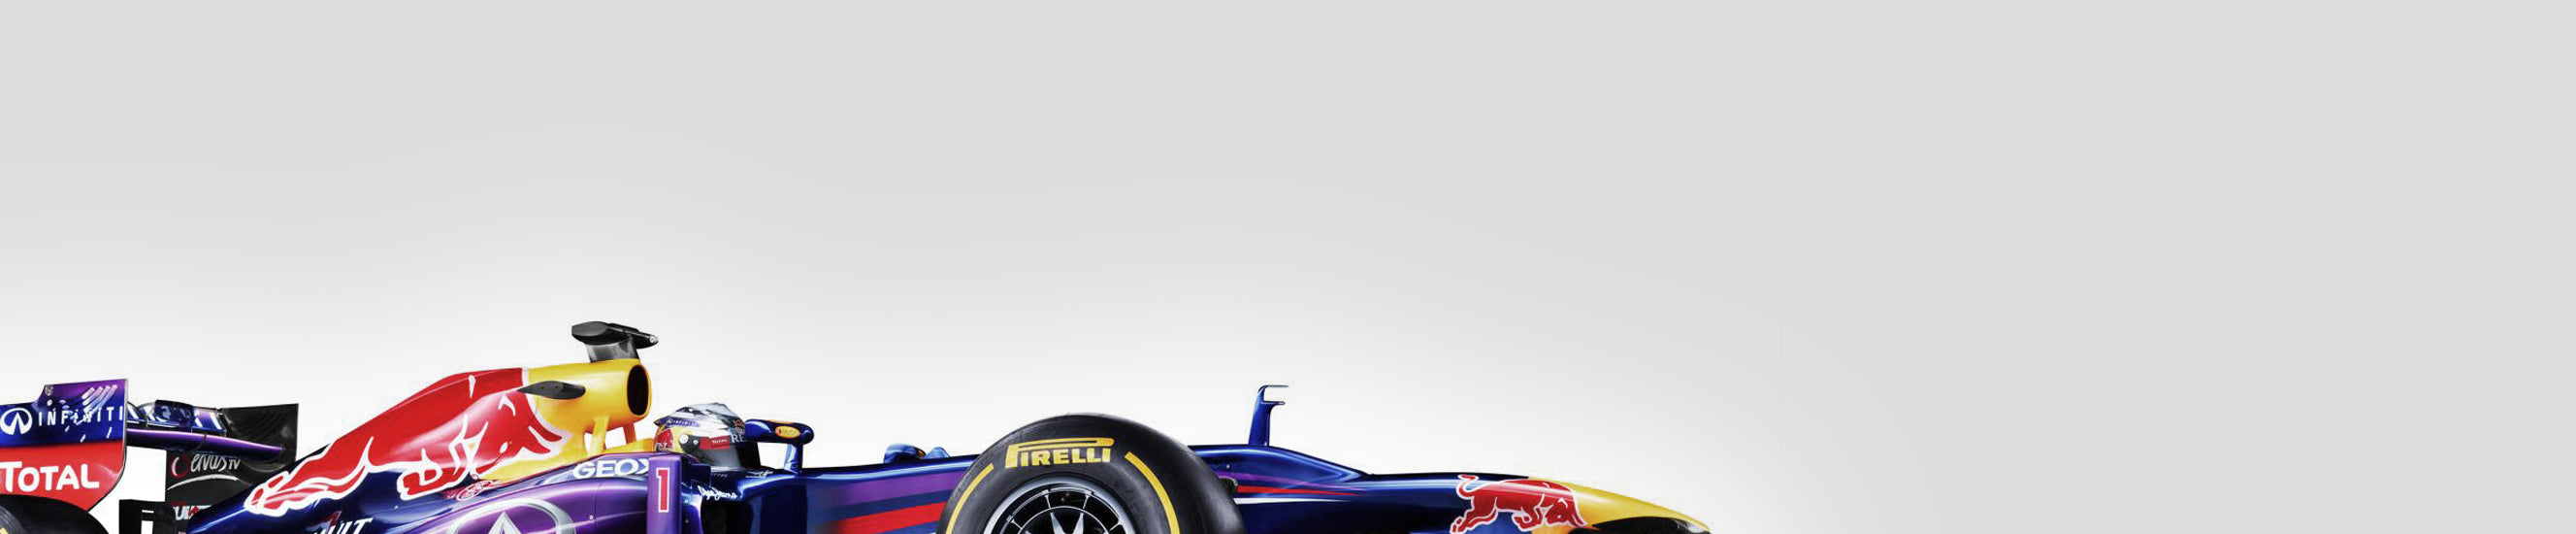 Maqueta Red Bull F1 316987